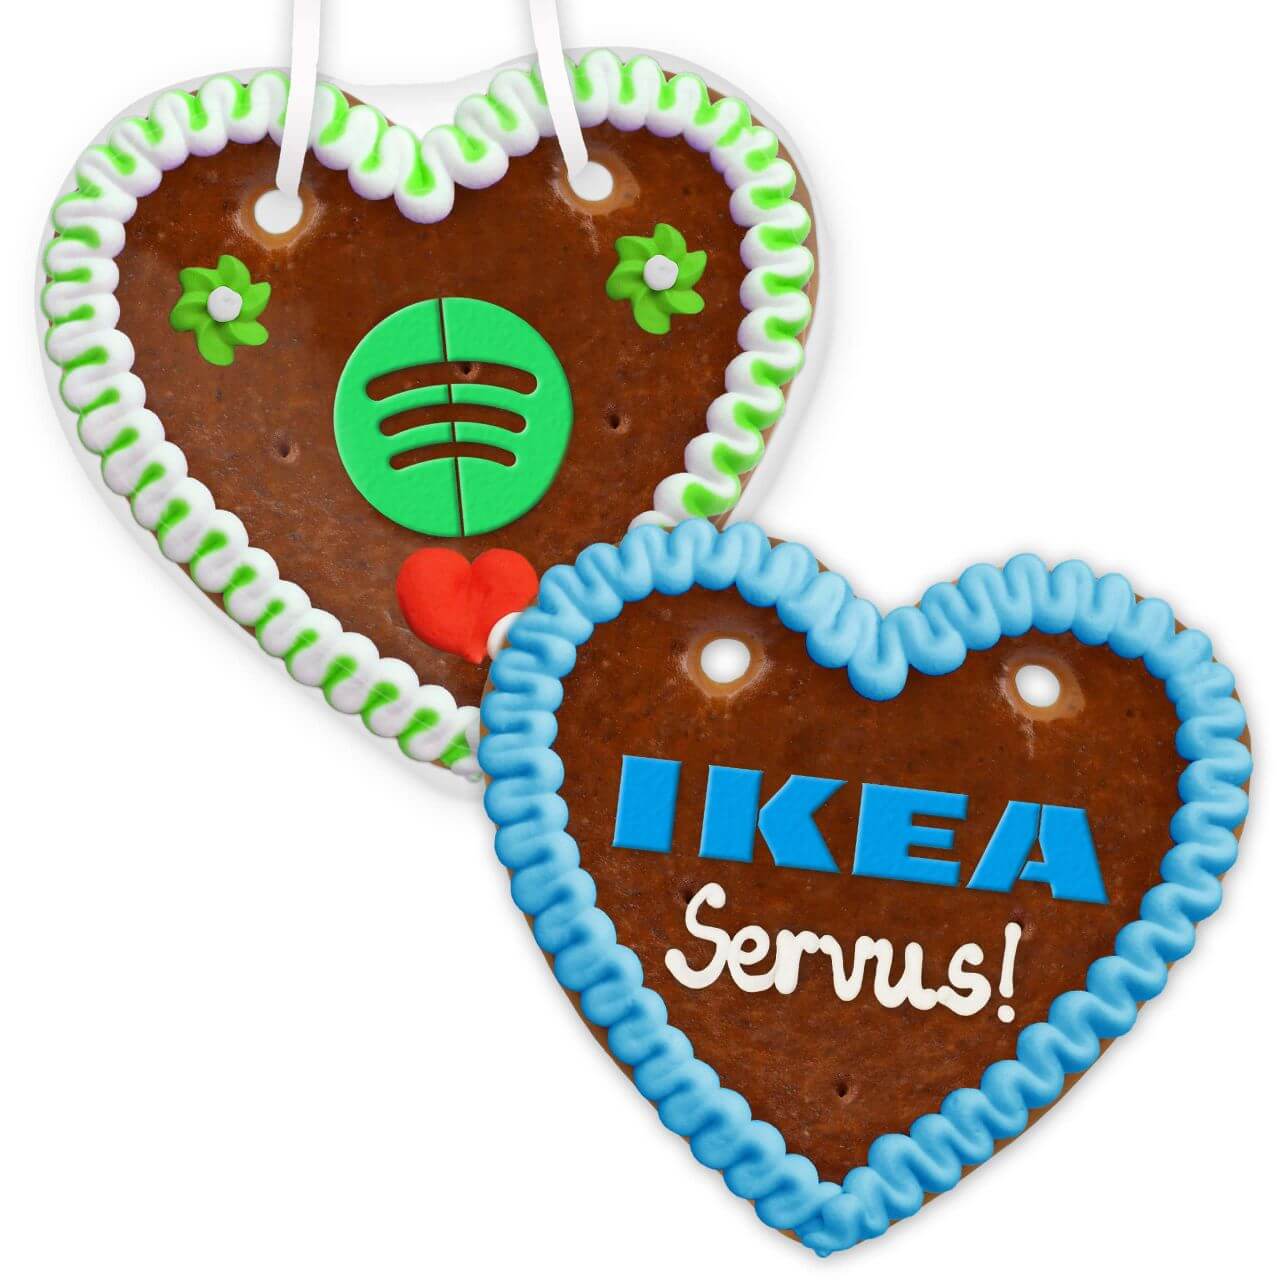 Gingerbread heart with custom printed logo, 14cm